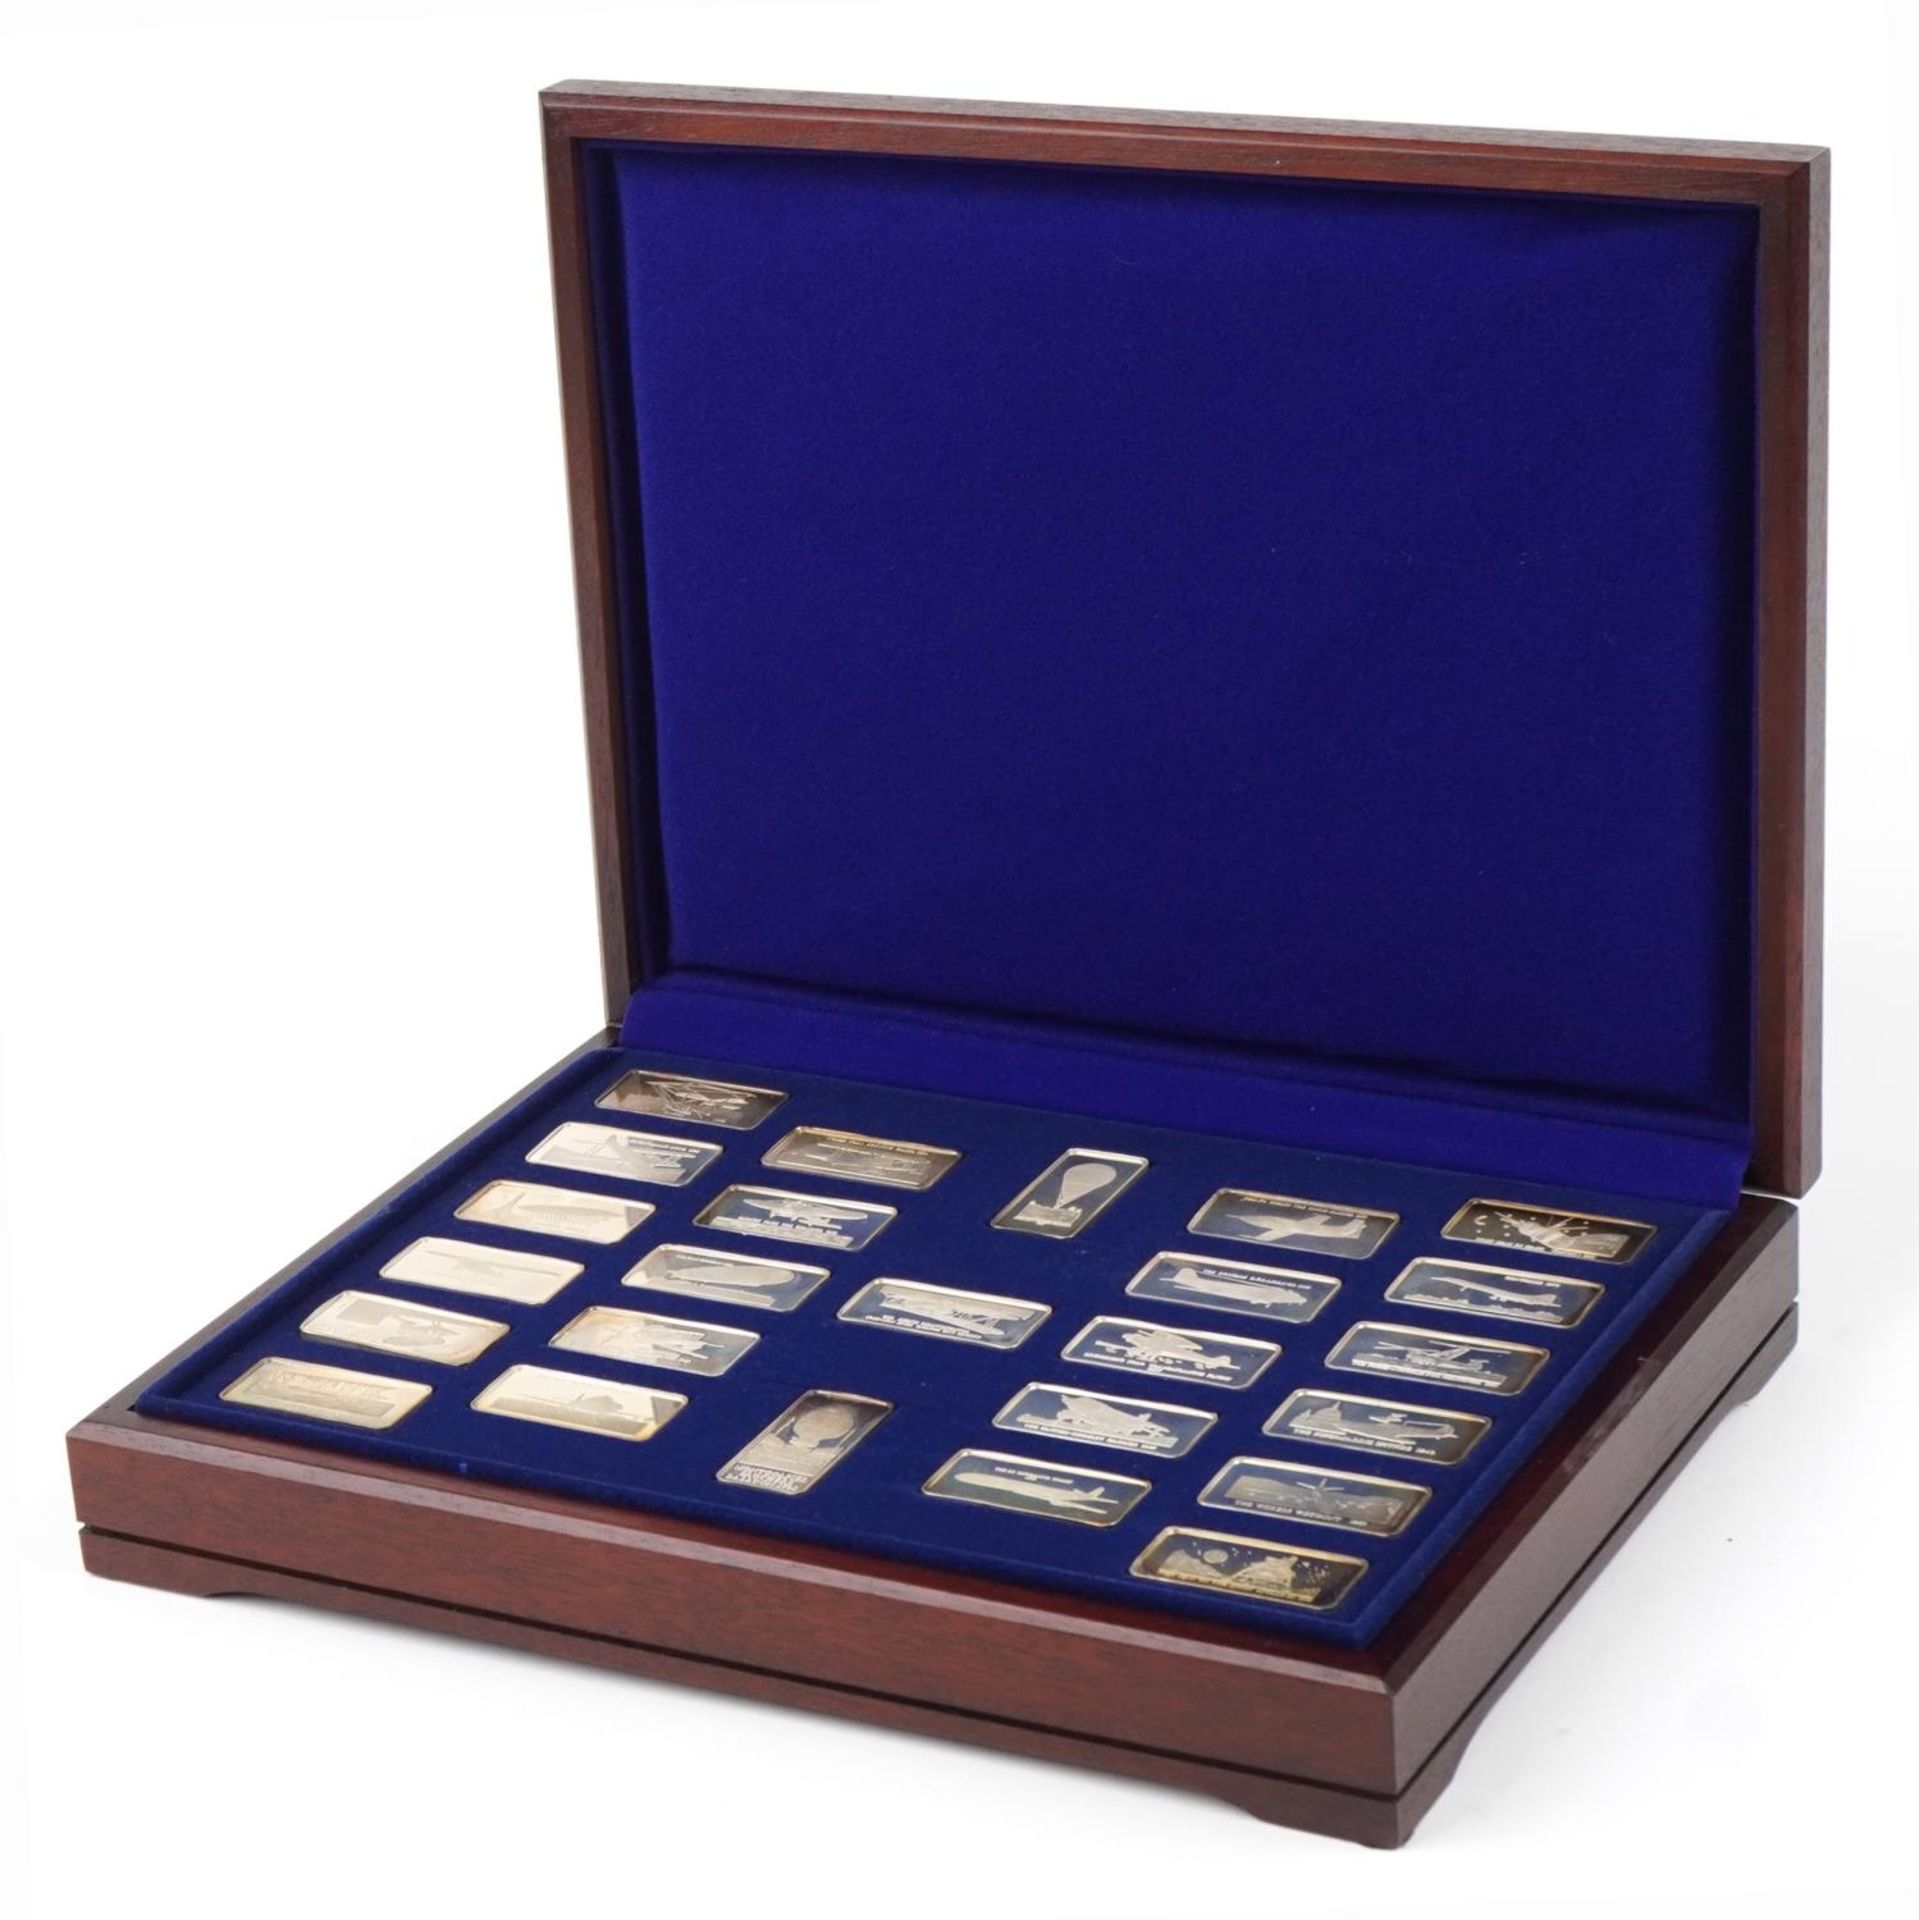 The Milestones of Manned Flight, twenty five solid silver ingots by The Birmingham Mint housed in